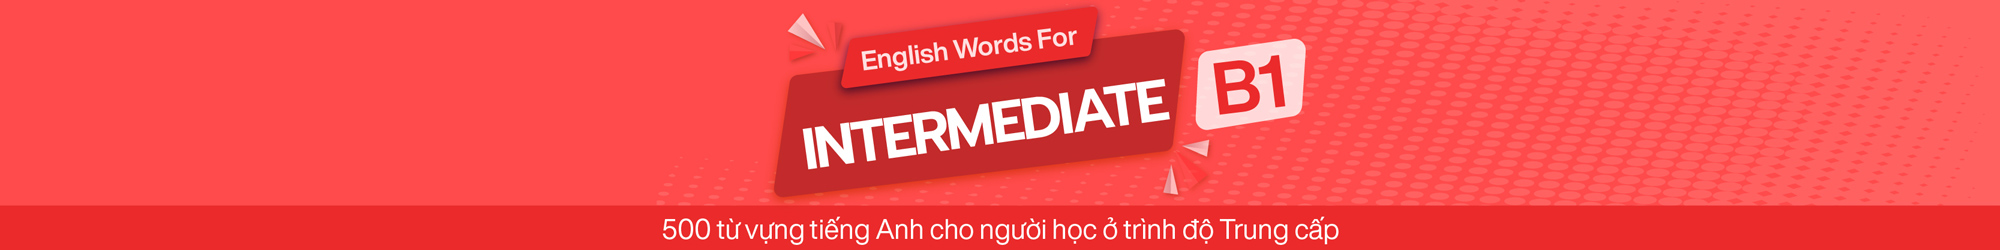 English Words For Intermediate (B1)